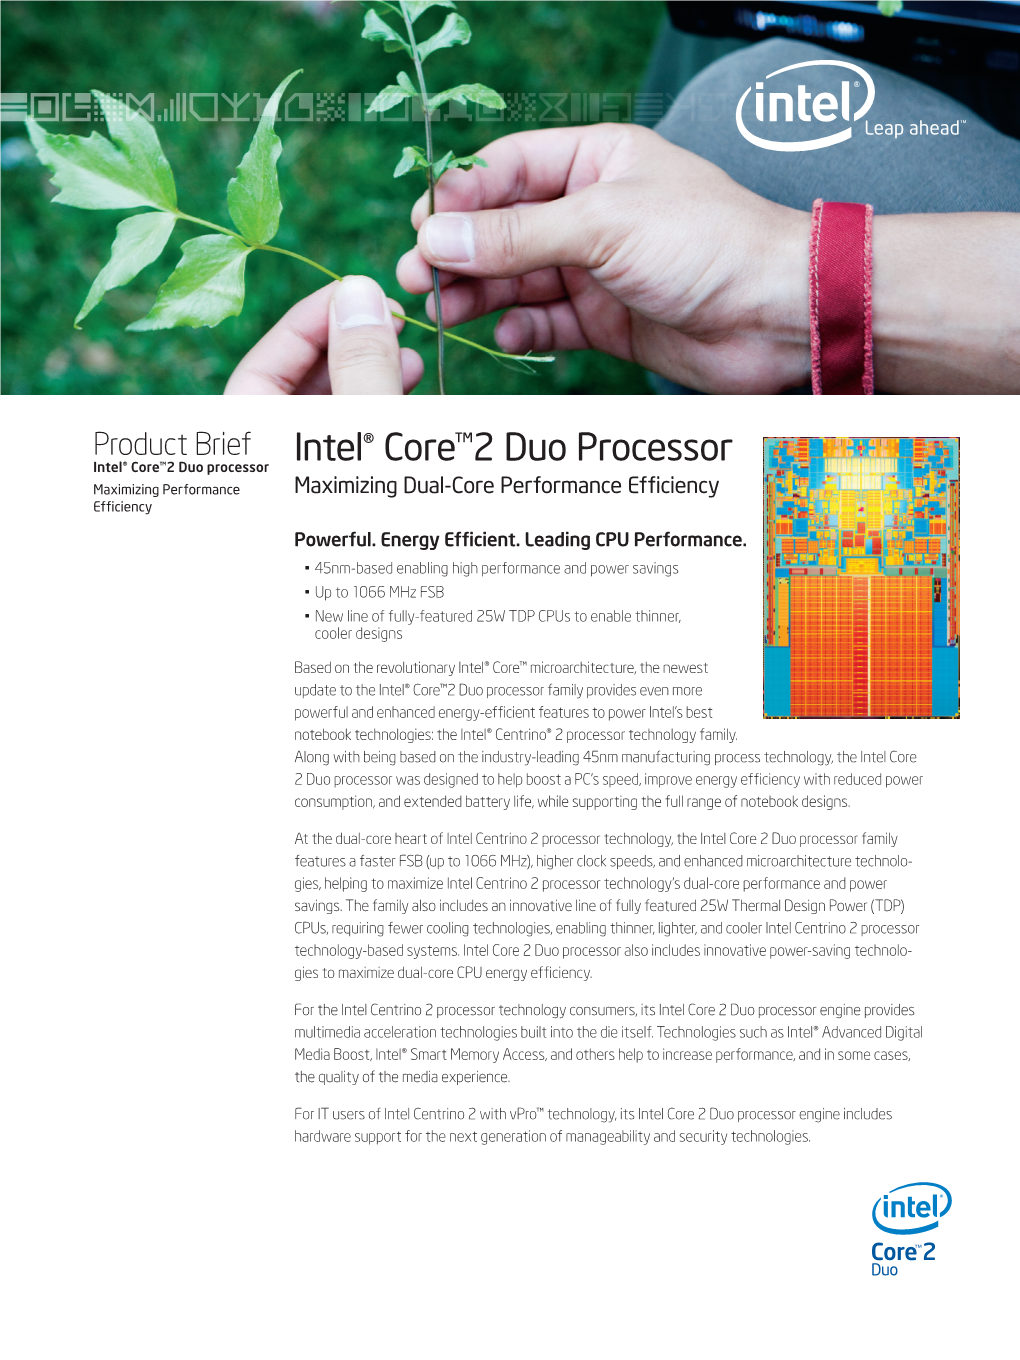 Intel® Core™2 Duo Processor Intel Core™2 Duo Processor Maximizing Performance Maximizing Dual-Core Performance Efficiency Efficiency Powerful